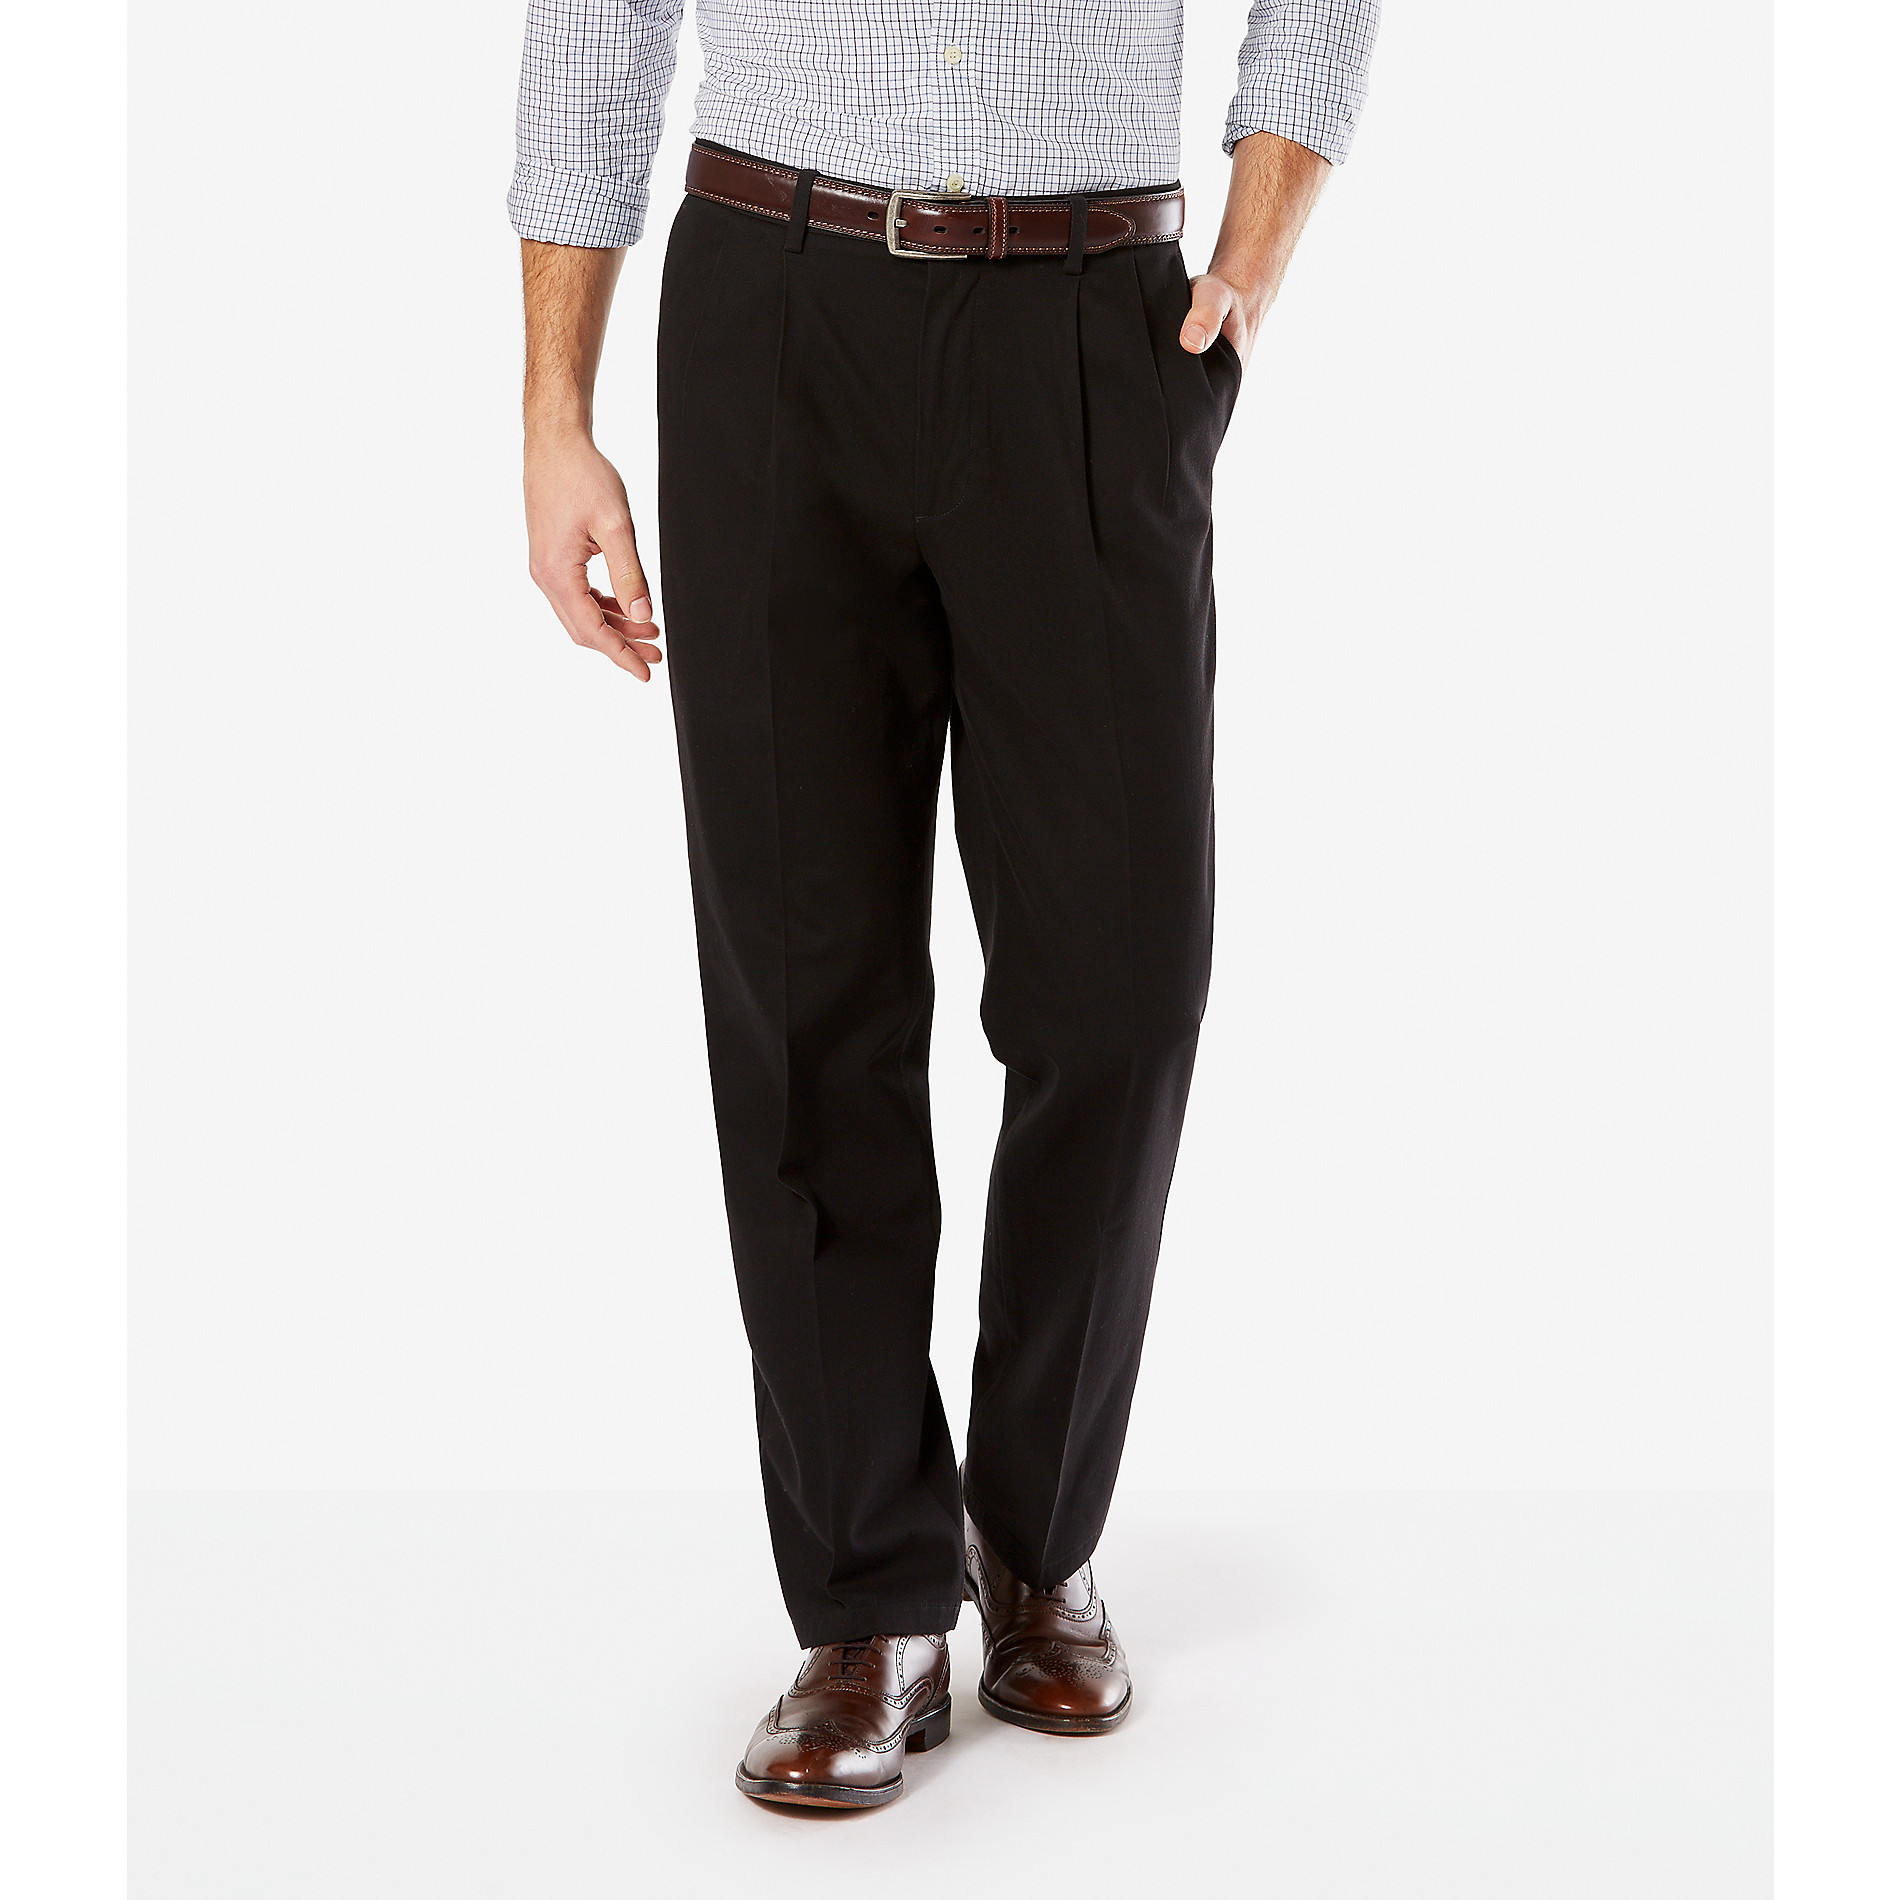 Dockers Men's Big & Tall Signature Khaki Pants - Pleated | Shop Your ...